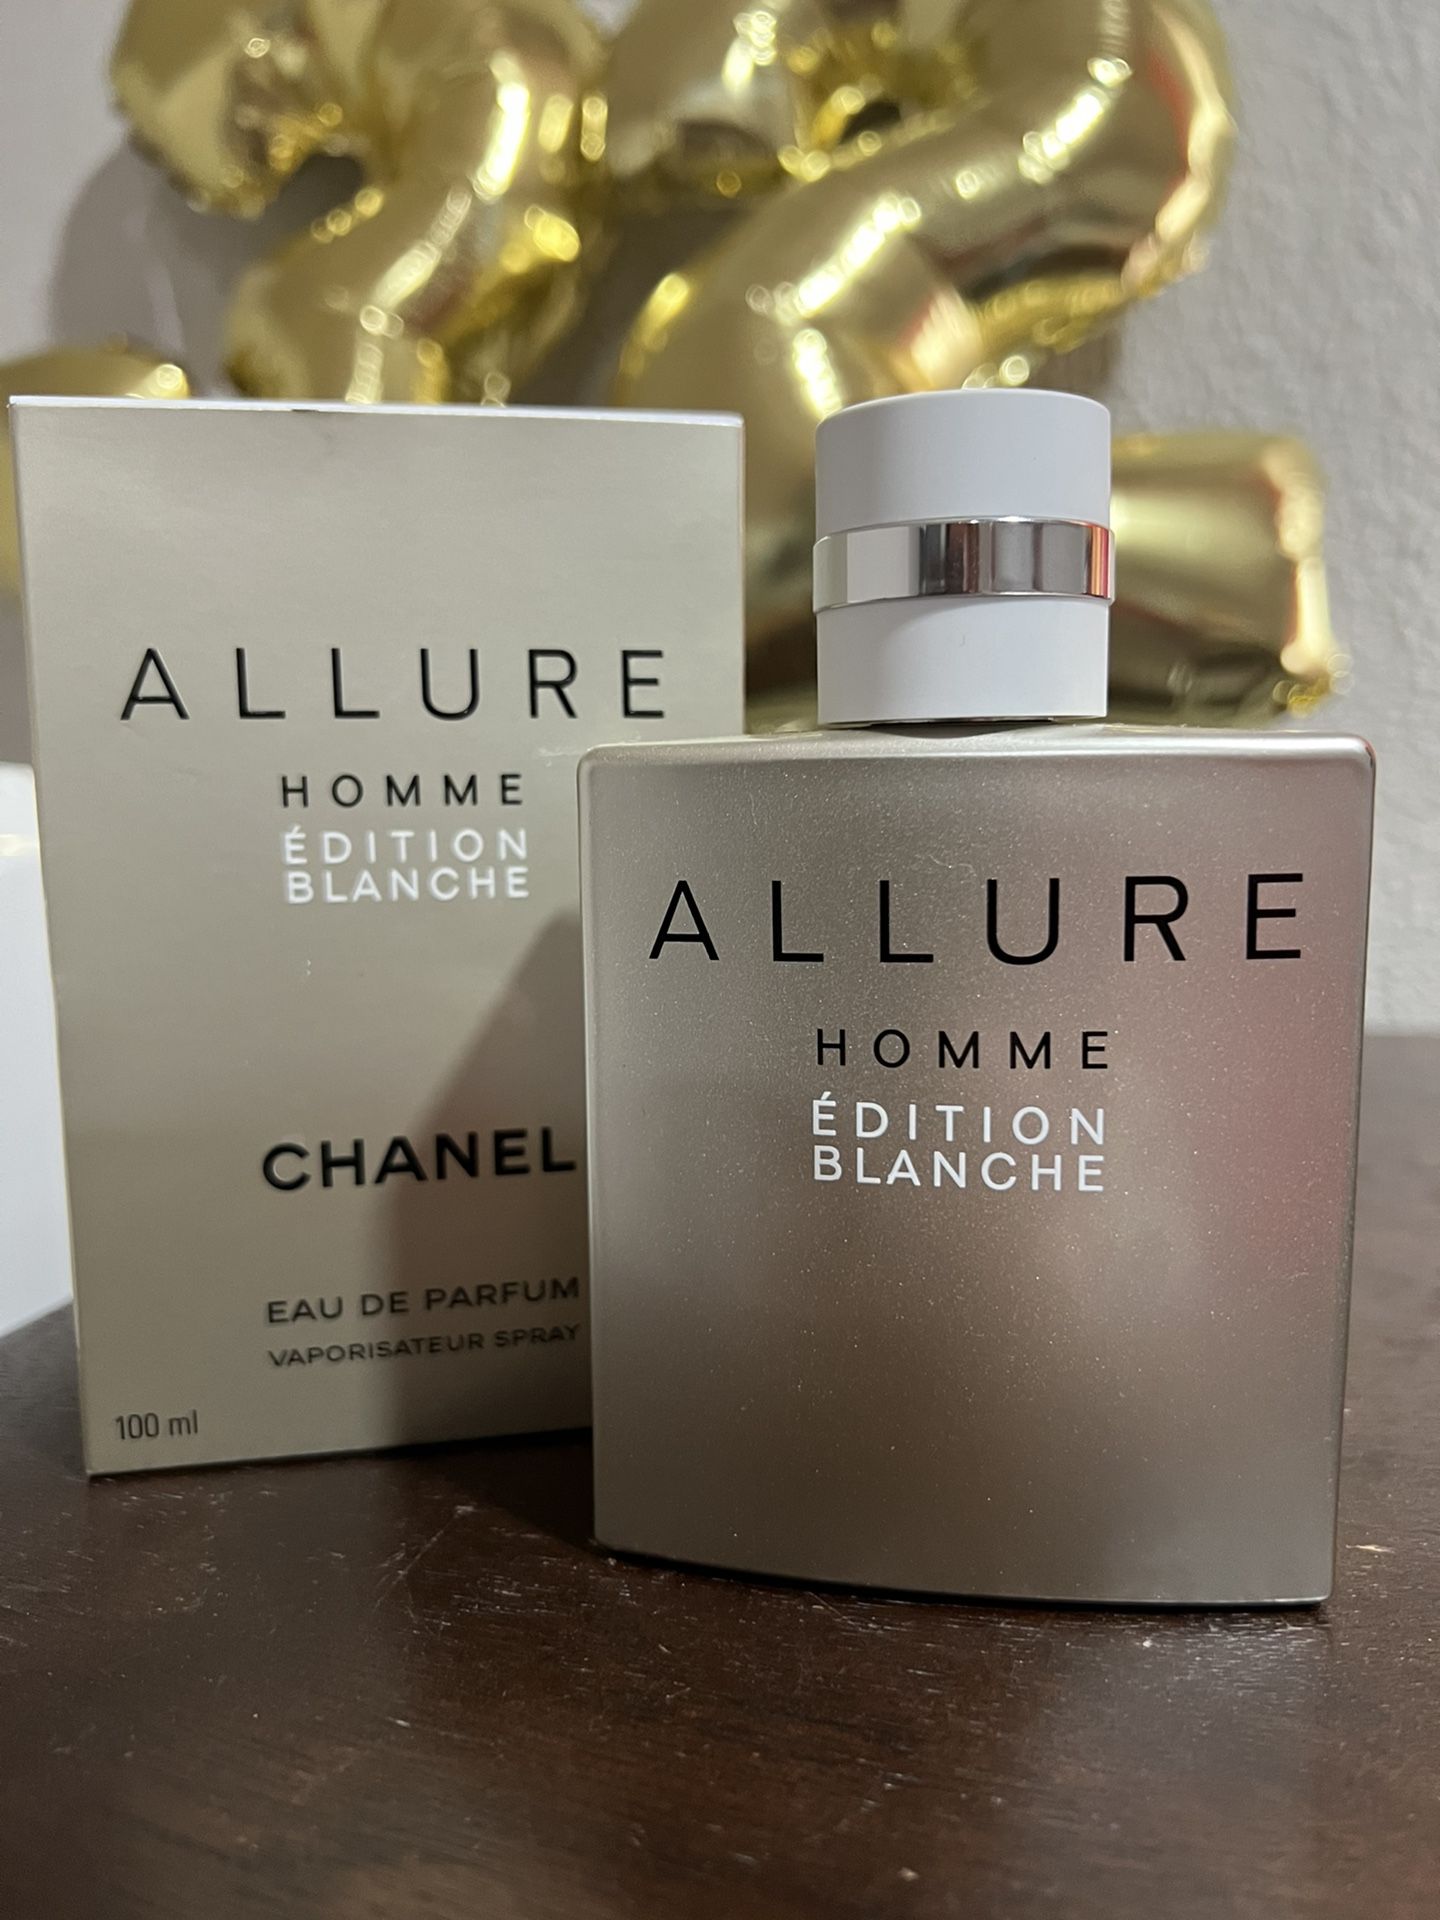 Chanel homme blanche. Шанель Аллюр эдишн Бланш. Chanel Allure homme Edition Blanche 100ml.